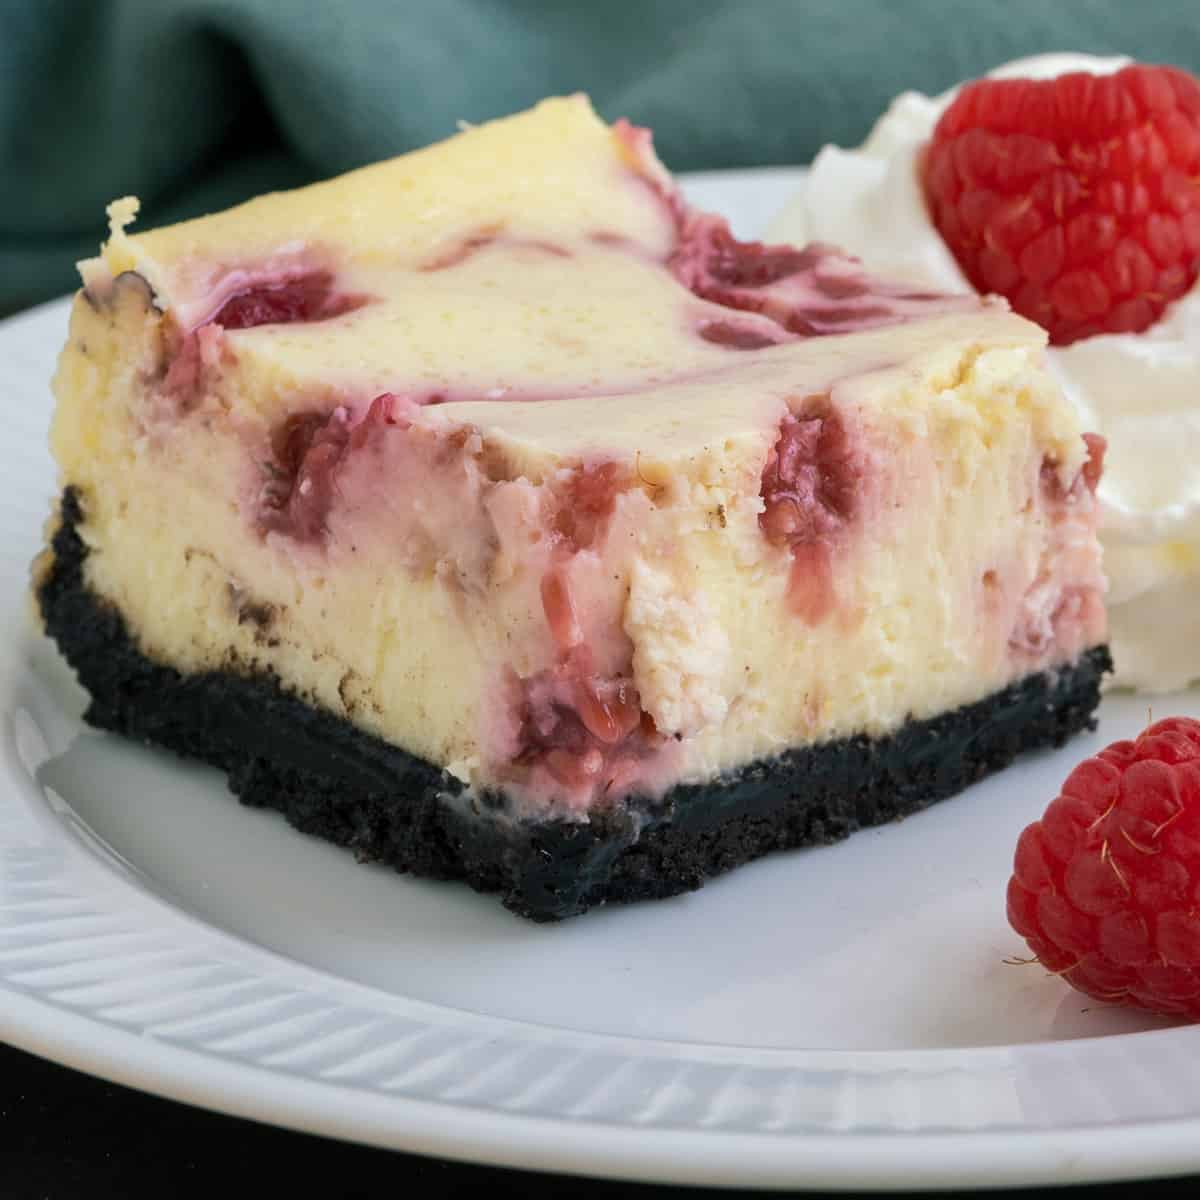 Raspberry Swirl Cheesecake Bite with darl chocolate Oreo crust closeup picture.